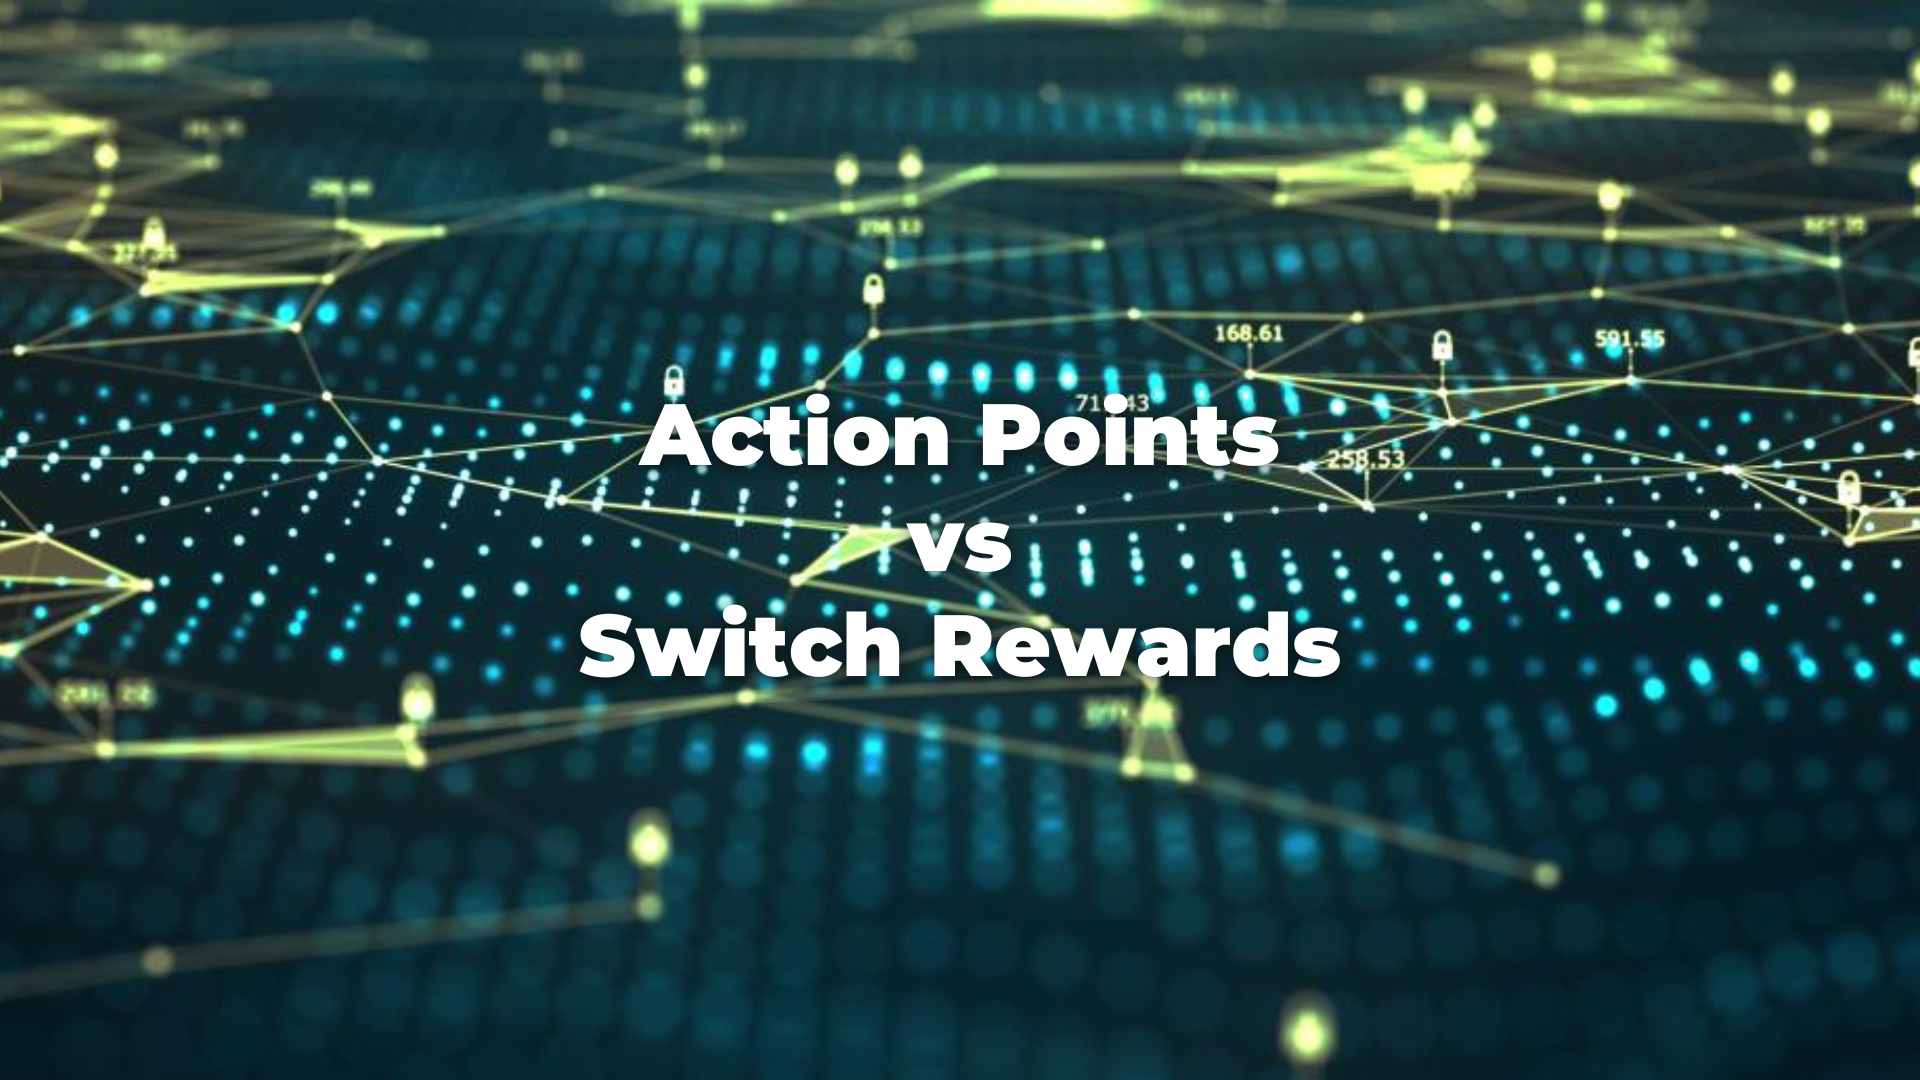 Action Points VS. Switch Rewards